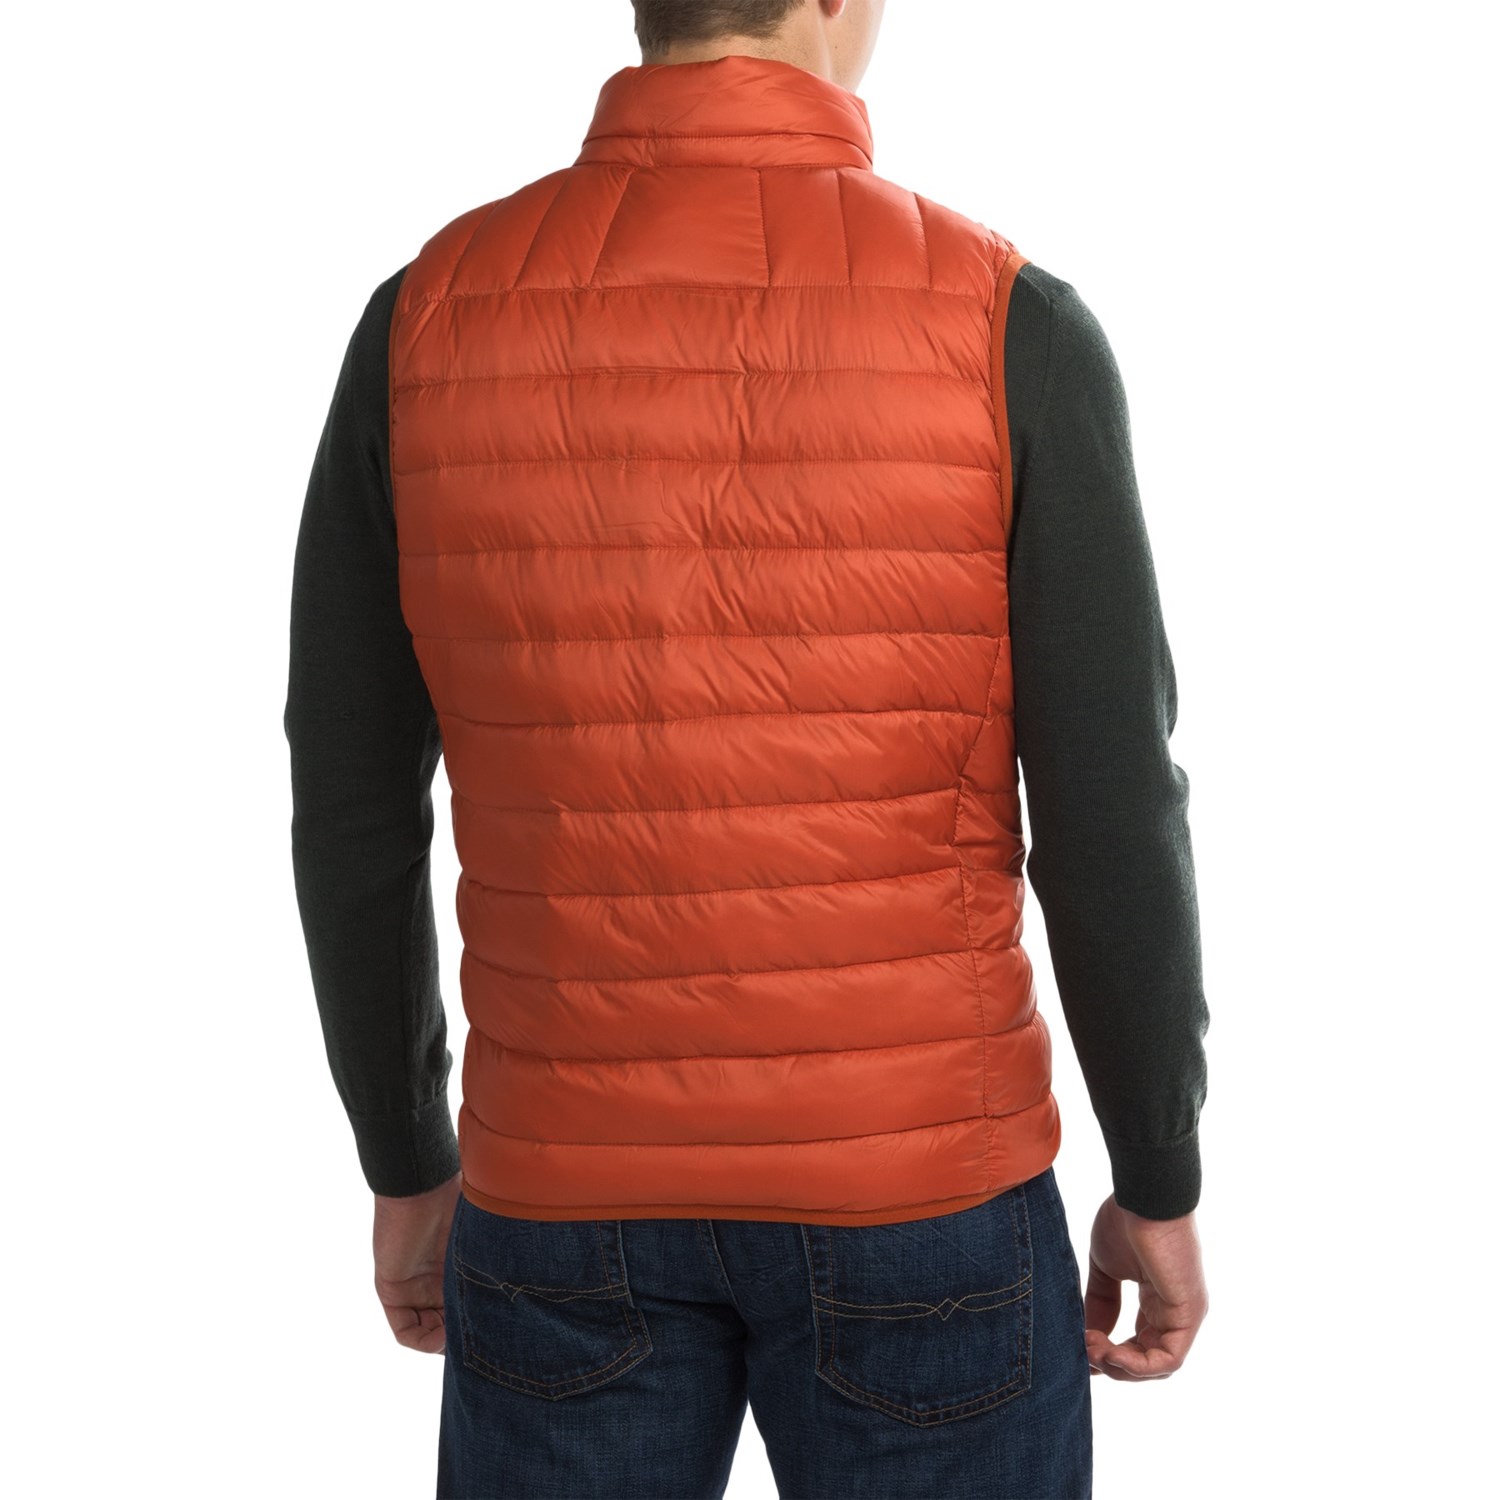 Hawke & Co Packable Down Vest (For Men) - Save 68%